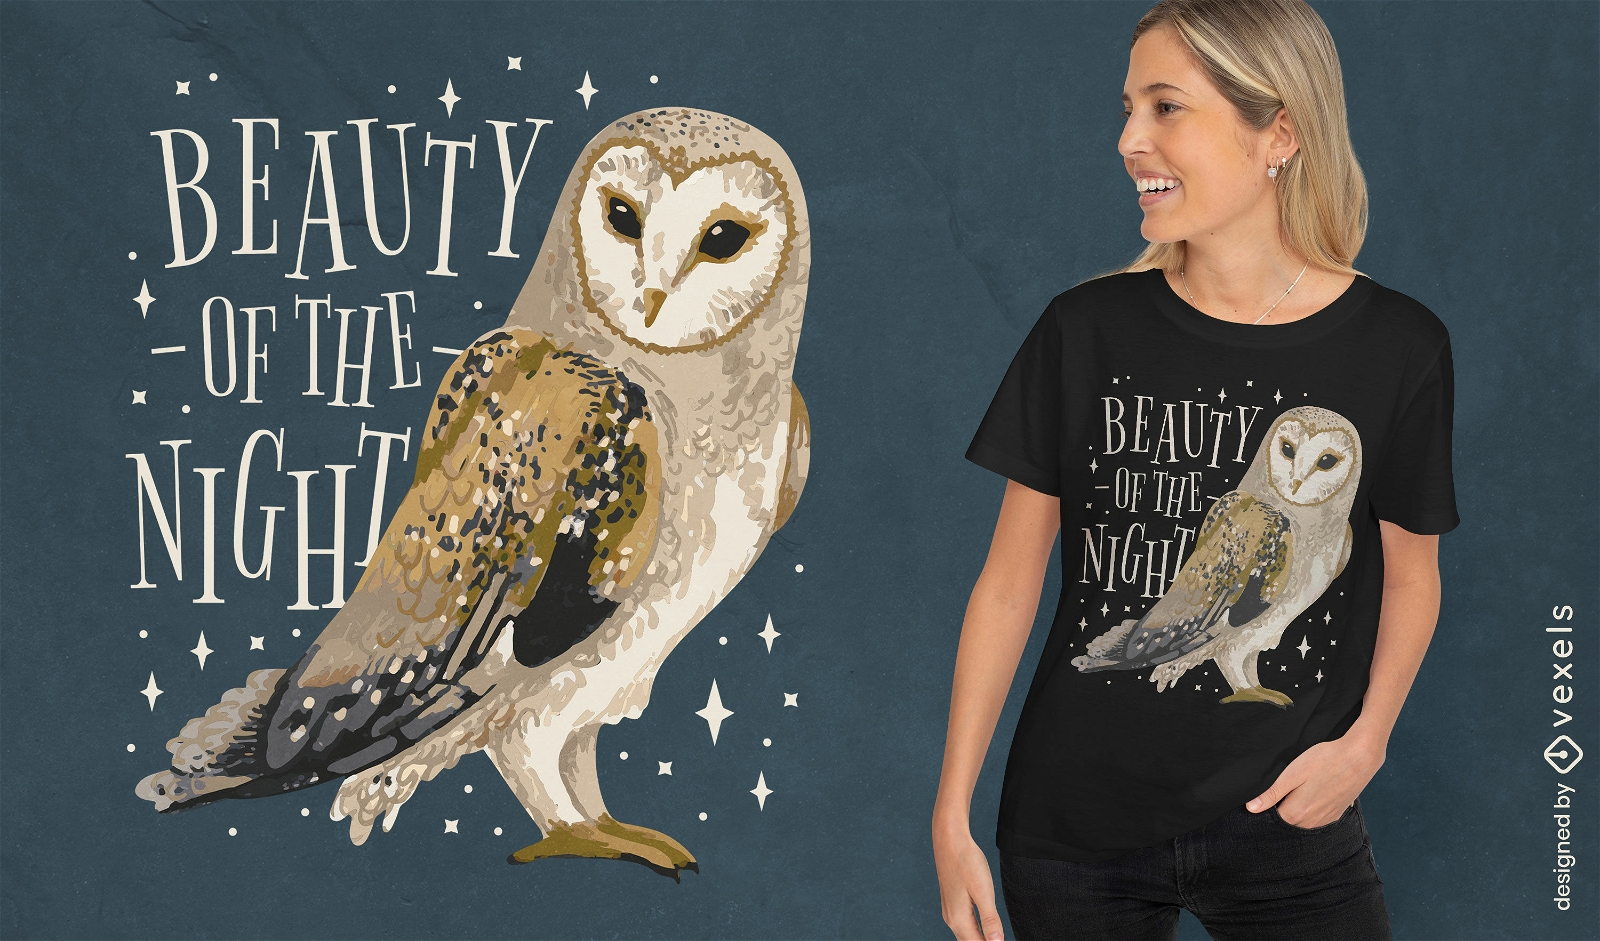 Beauty of the night owl t-shirt design